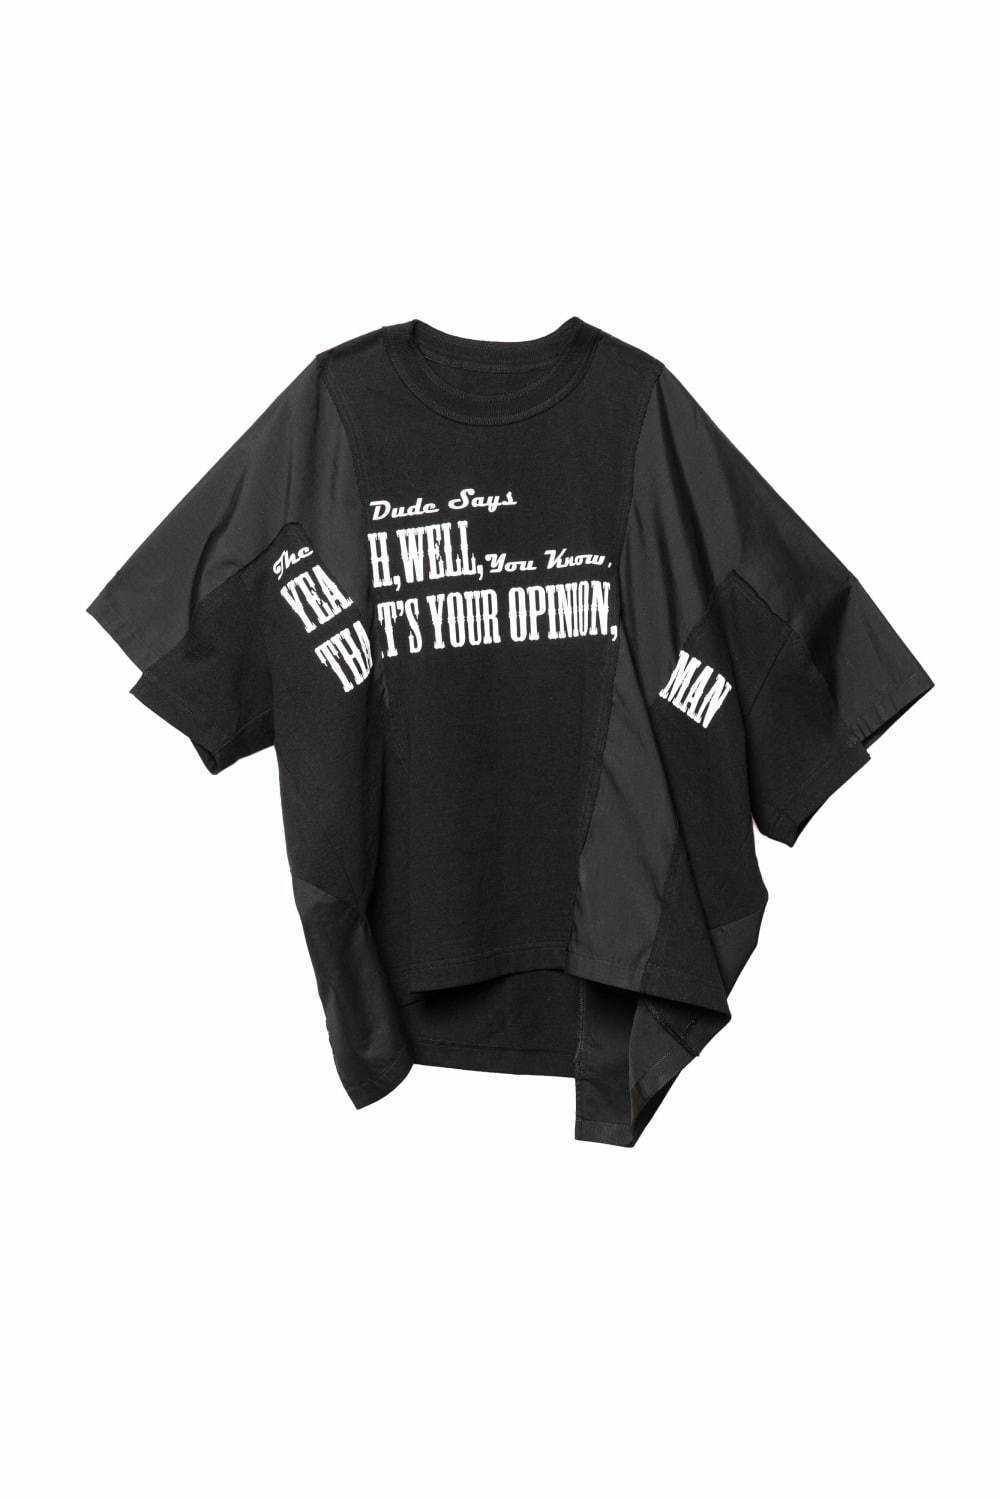 Tシャツ/カットソー(半袖/袖なし)【新品未使用】sacai  BIG  LEBOWSKI   コラボTシャツ